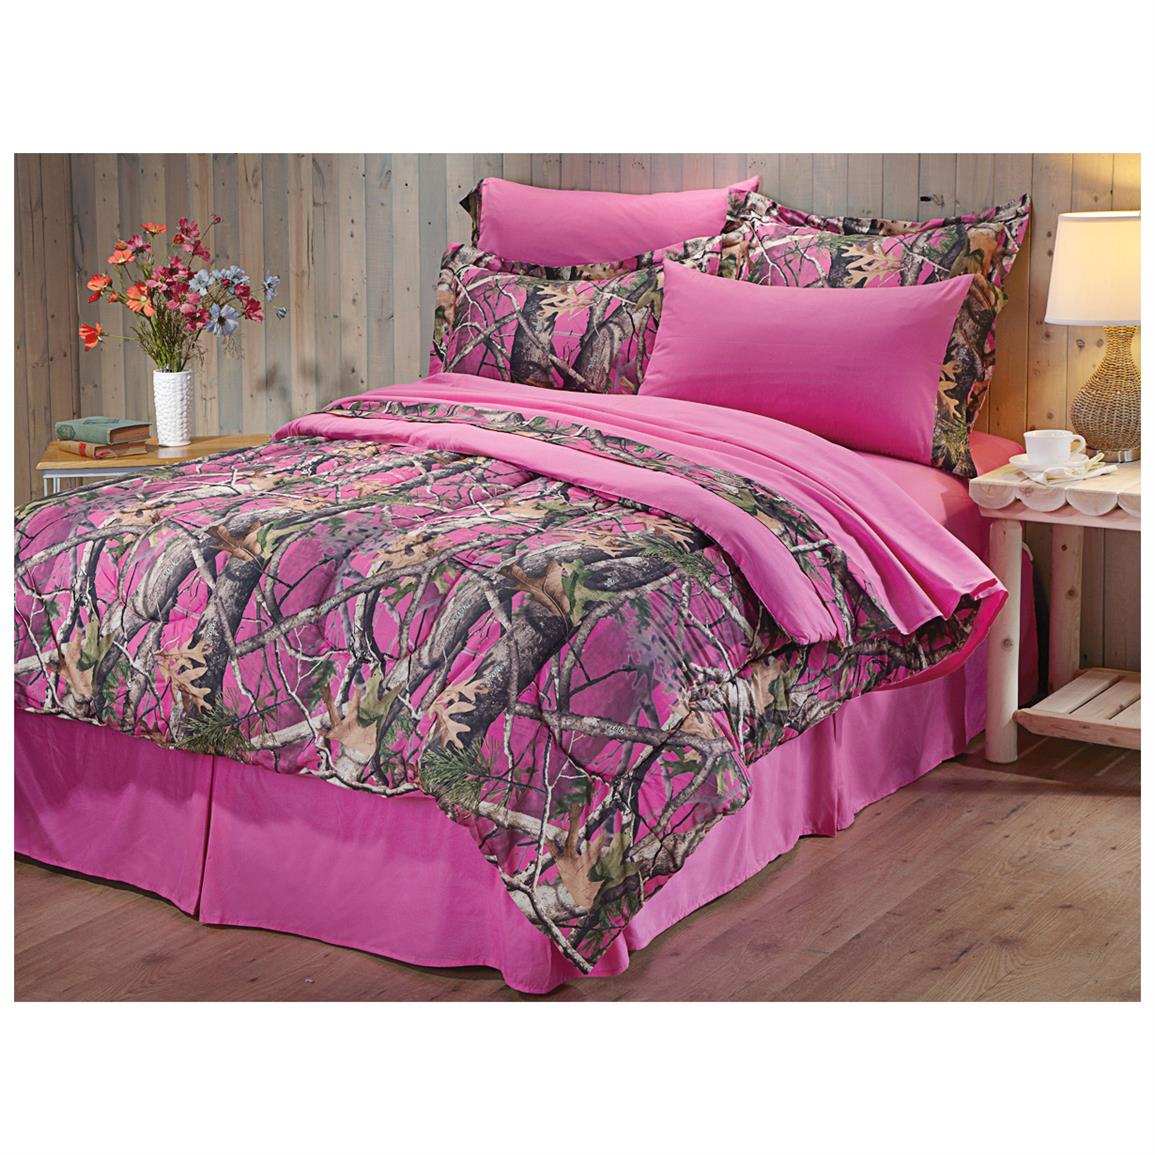 CASTLECREEK Next Vista Pink Camo Bed Set, 8 Piece - 609062, Comforters, Sets & Collections at ...